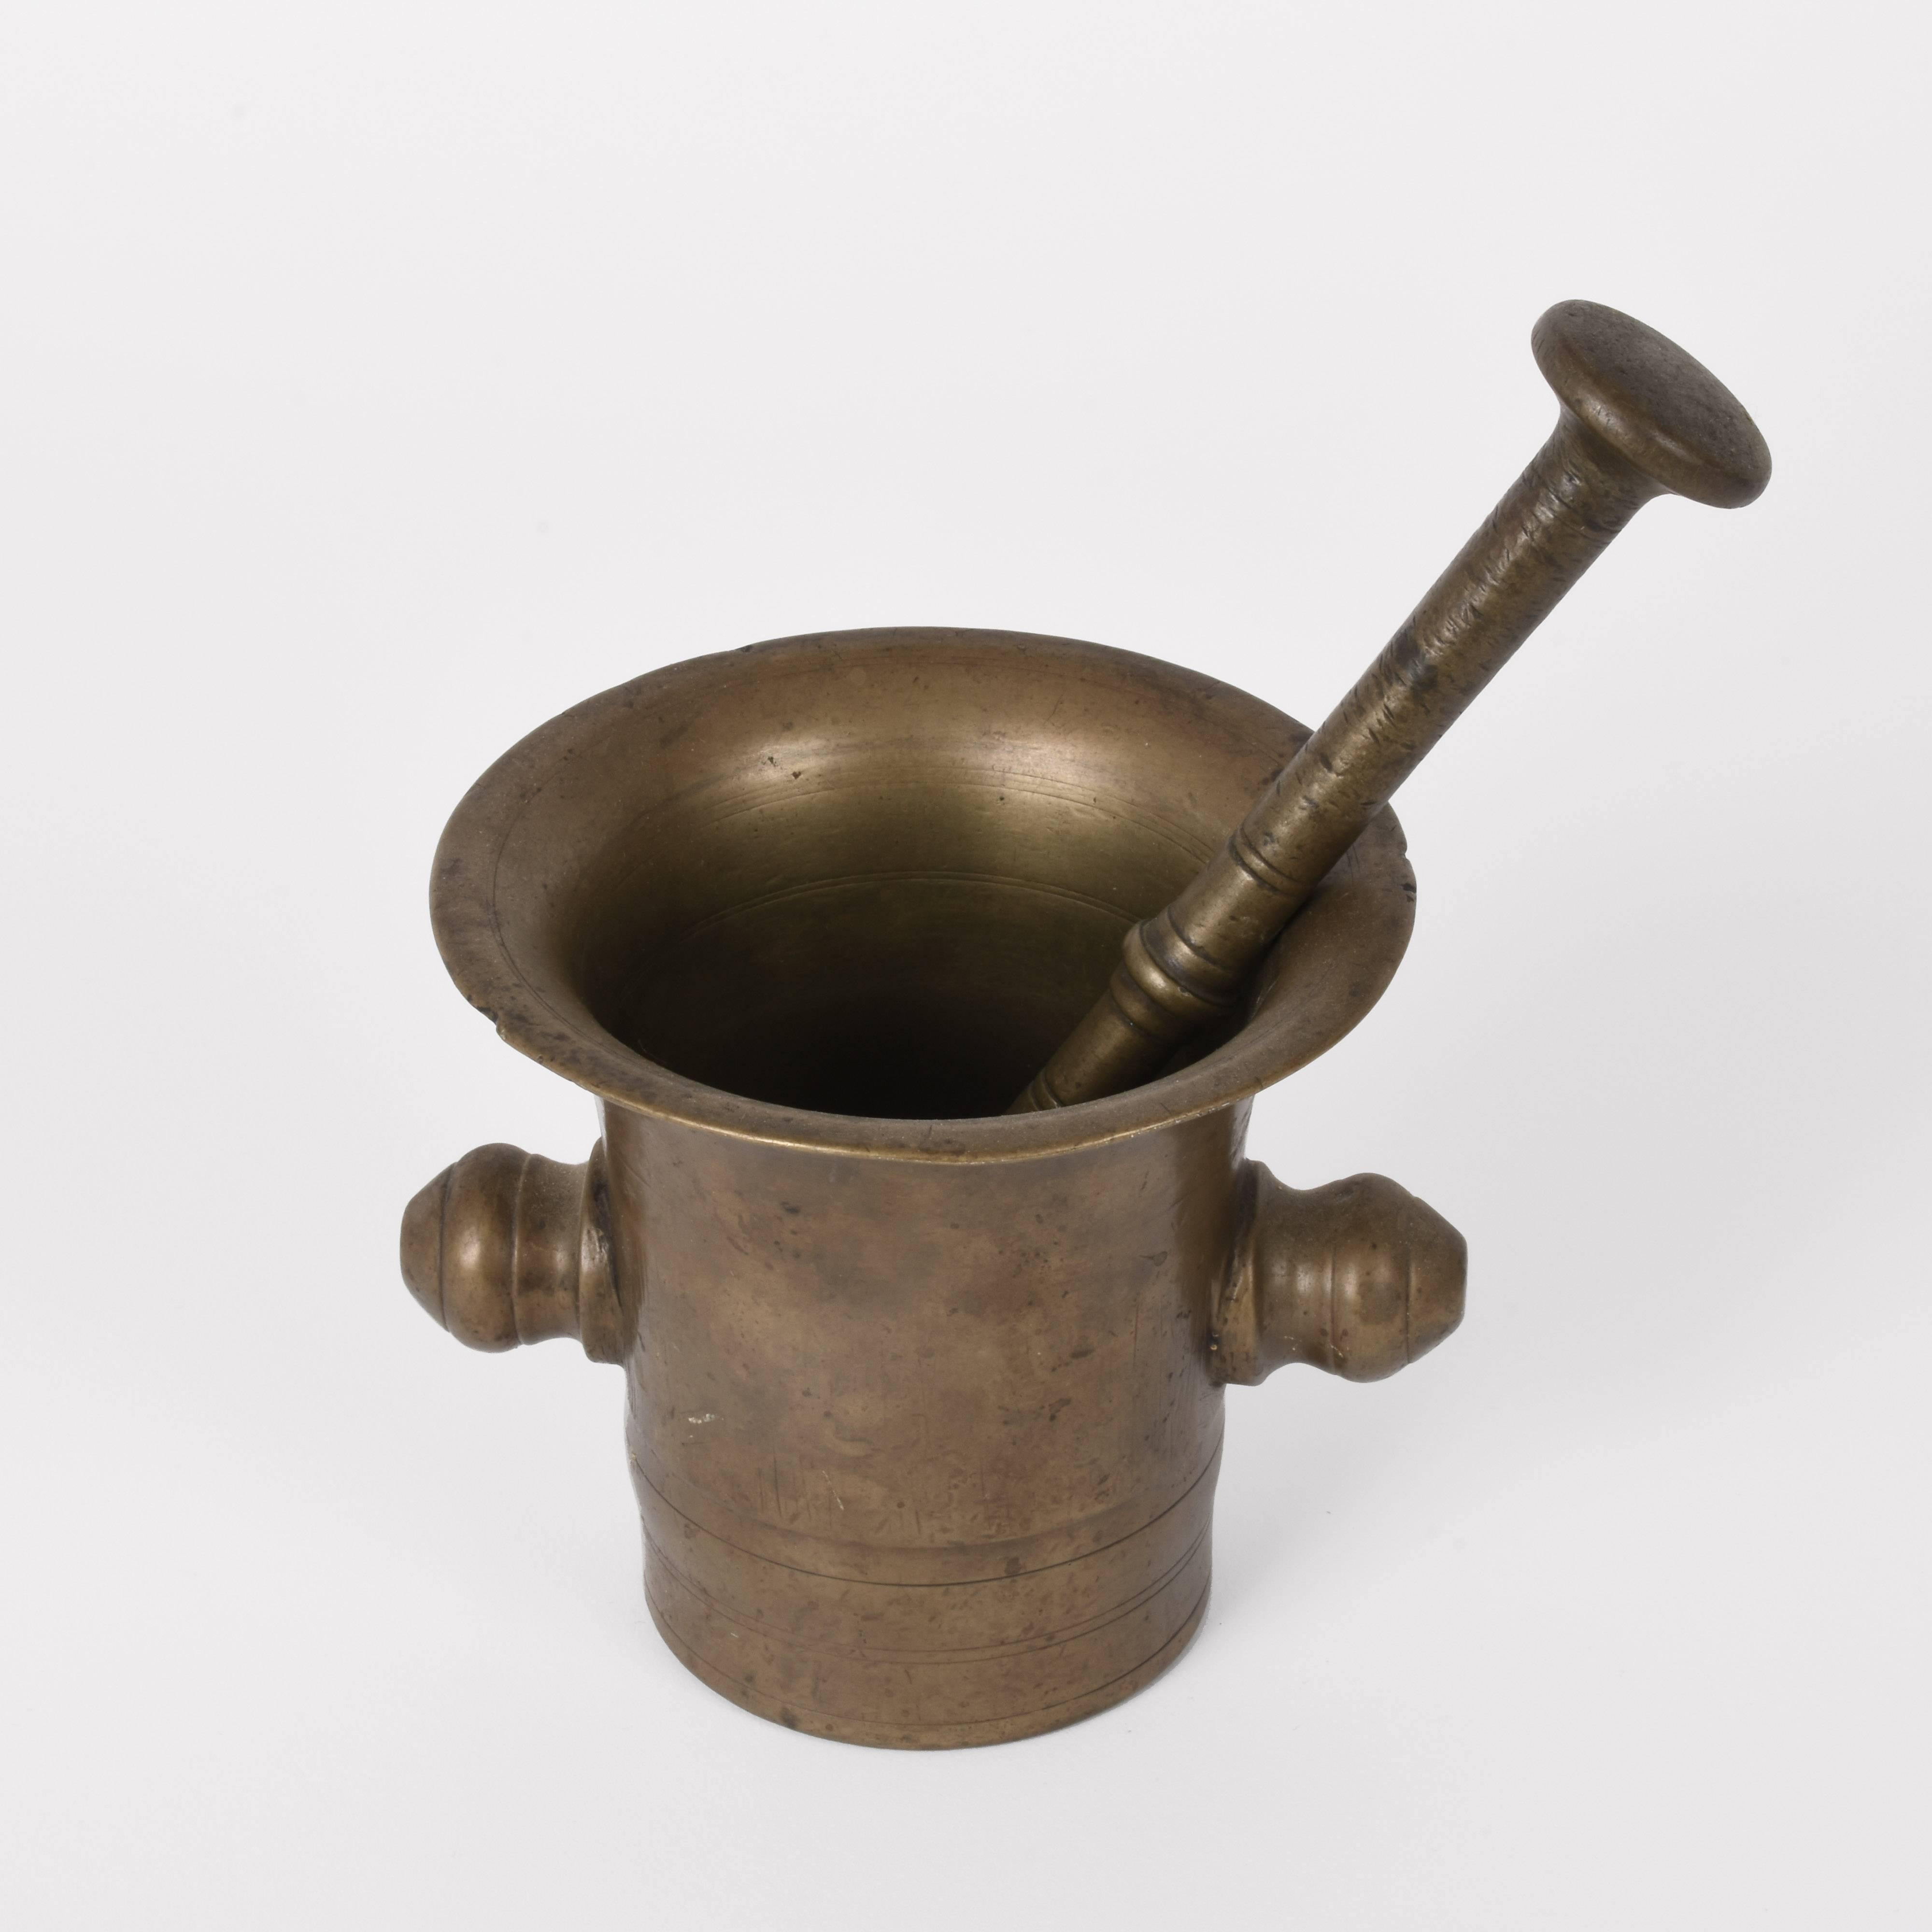 Antique bronze mortar. Handmade with pestle. Original patina
Pestle height 8.07 in.